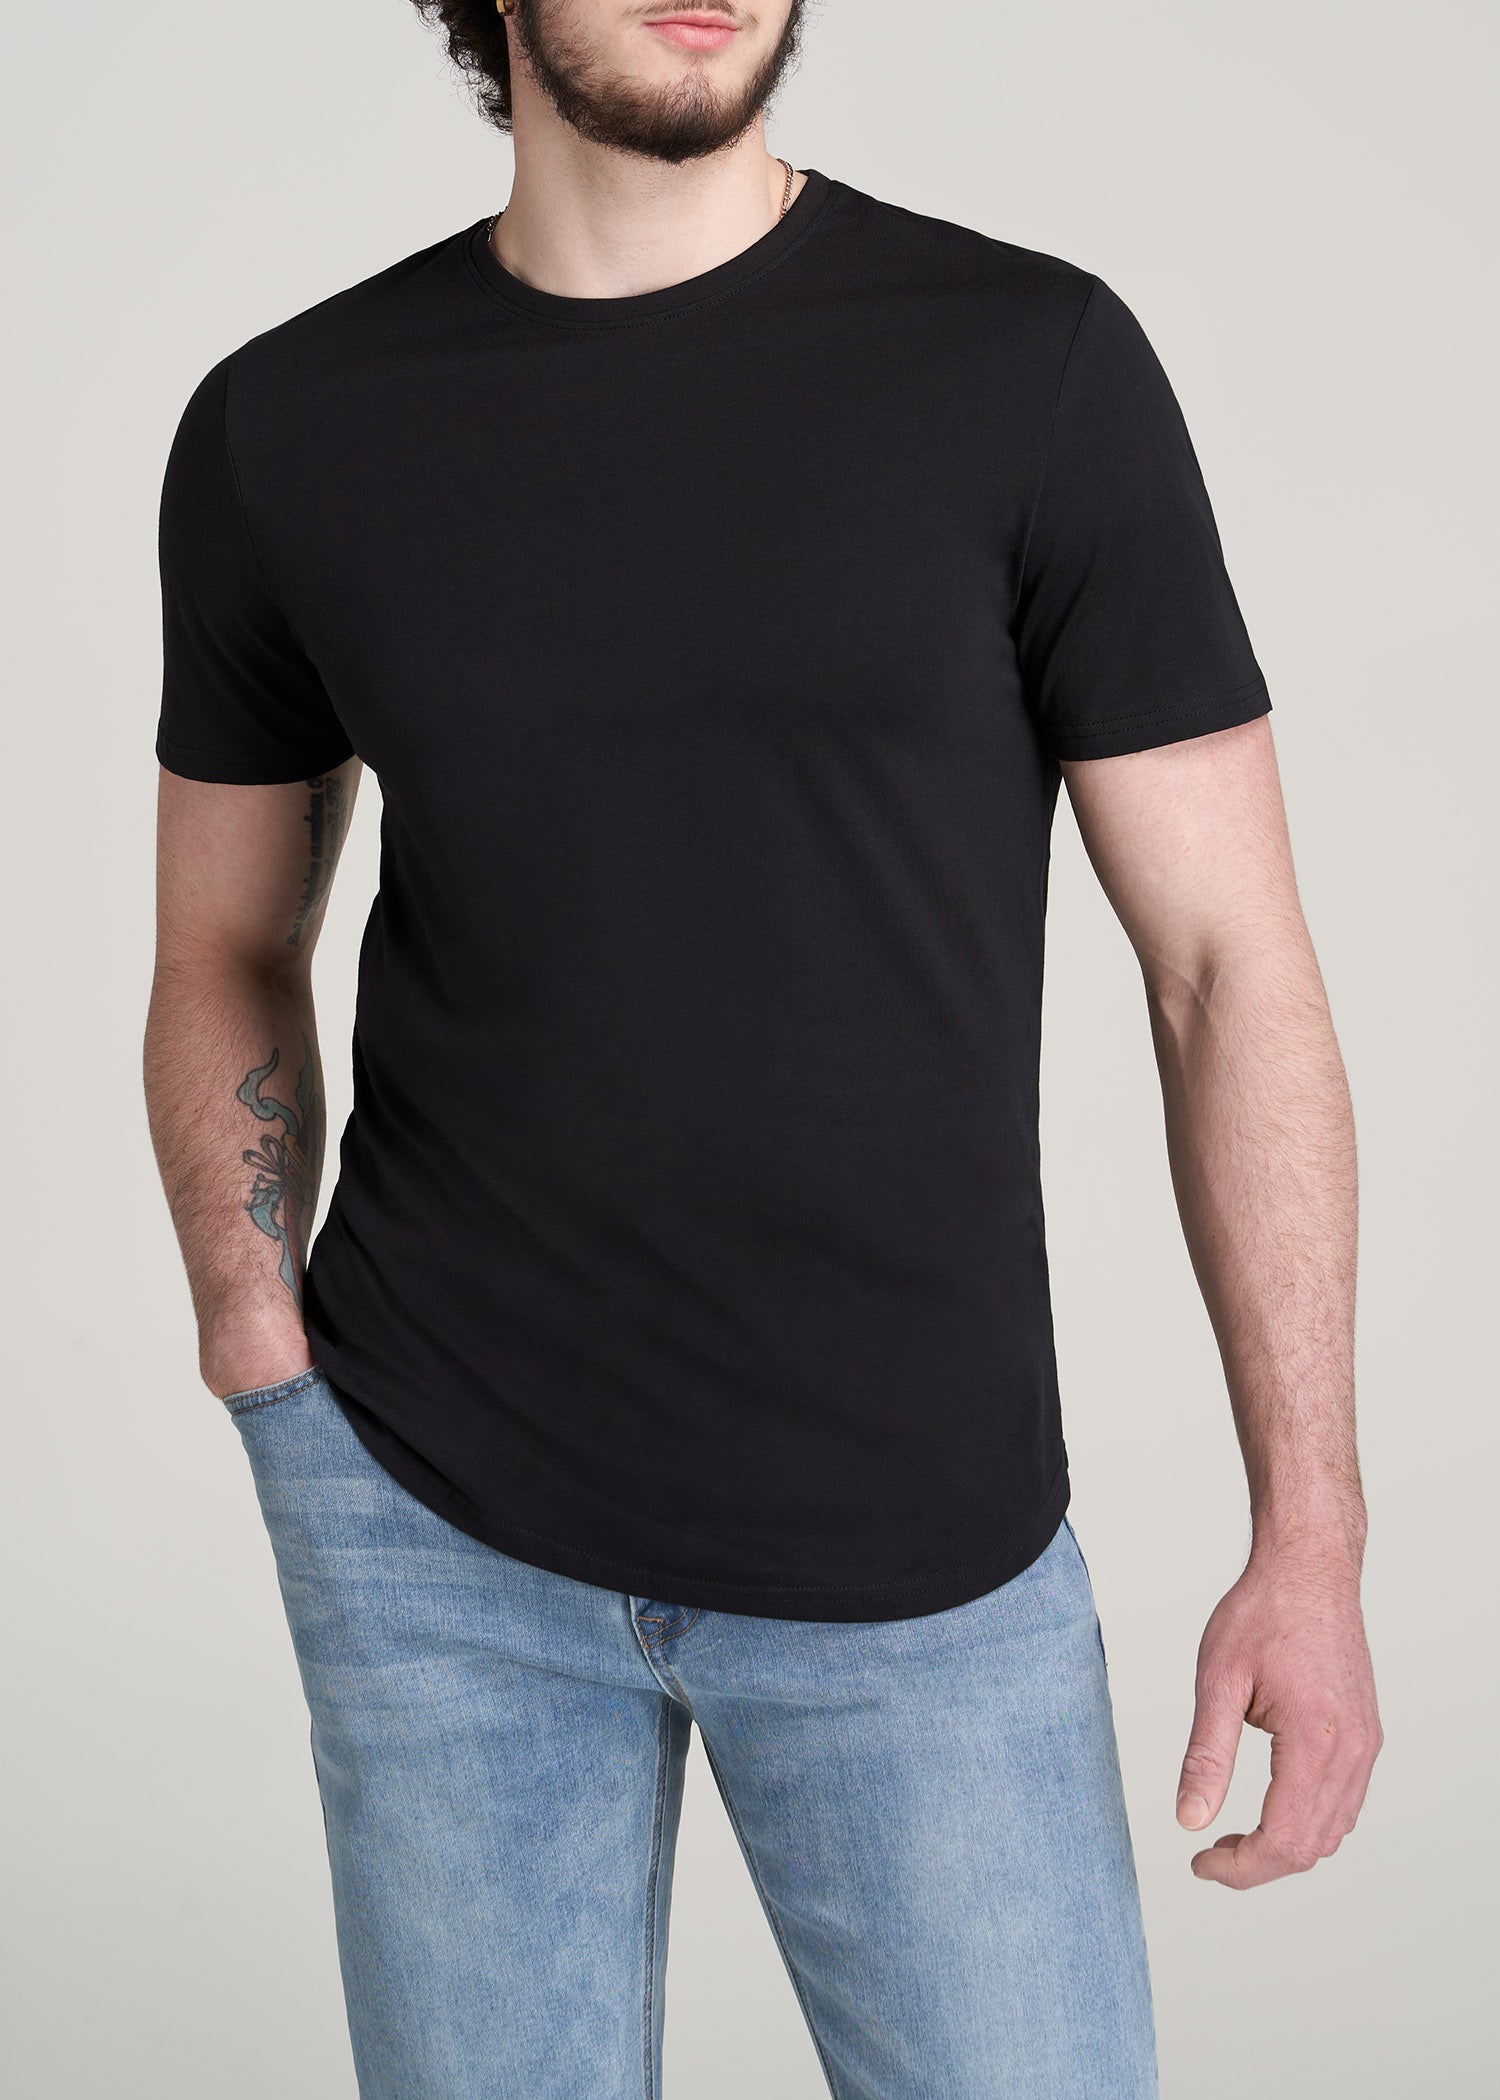 Men's Black Shirts